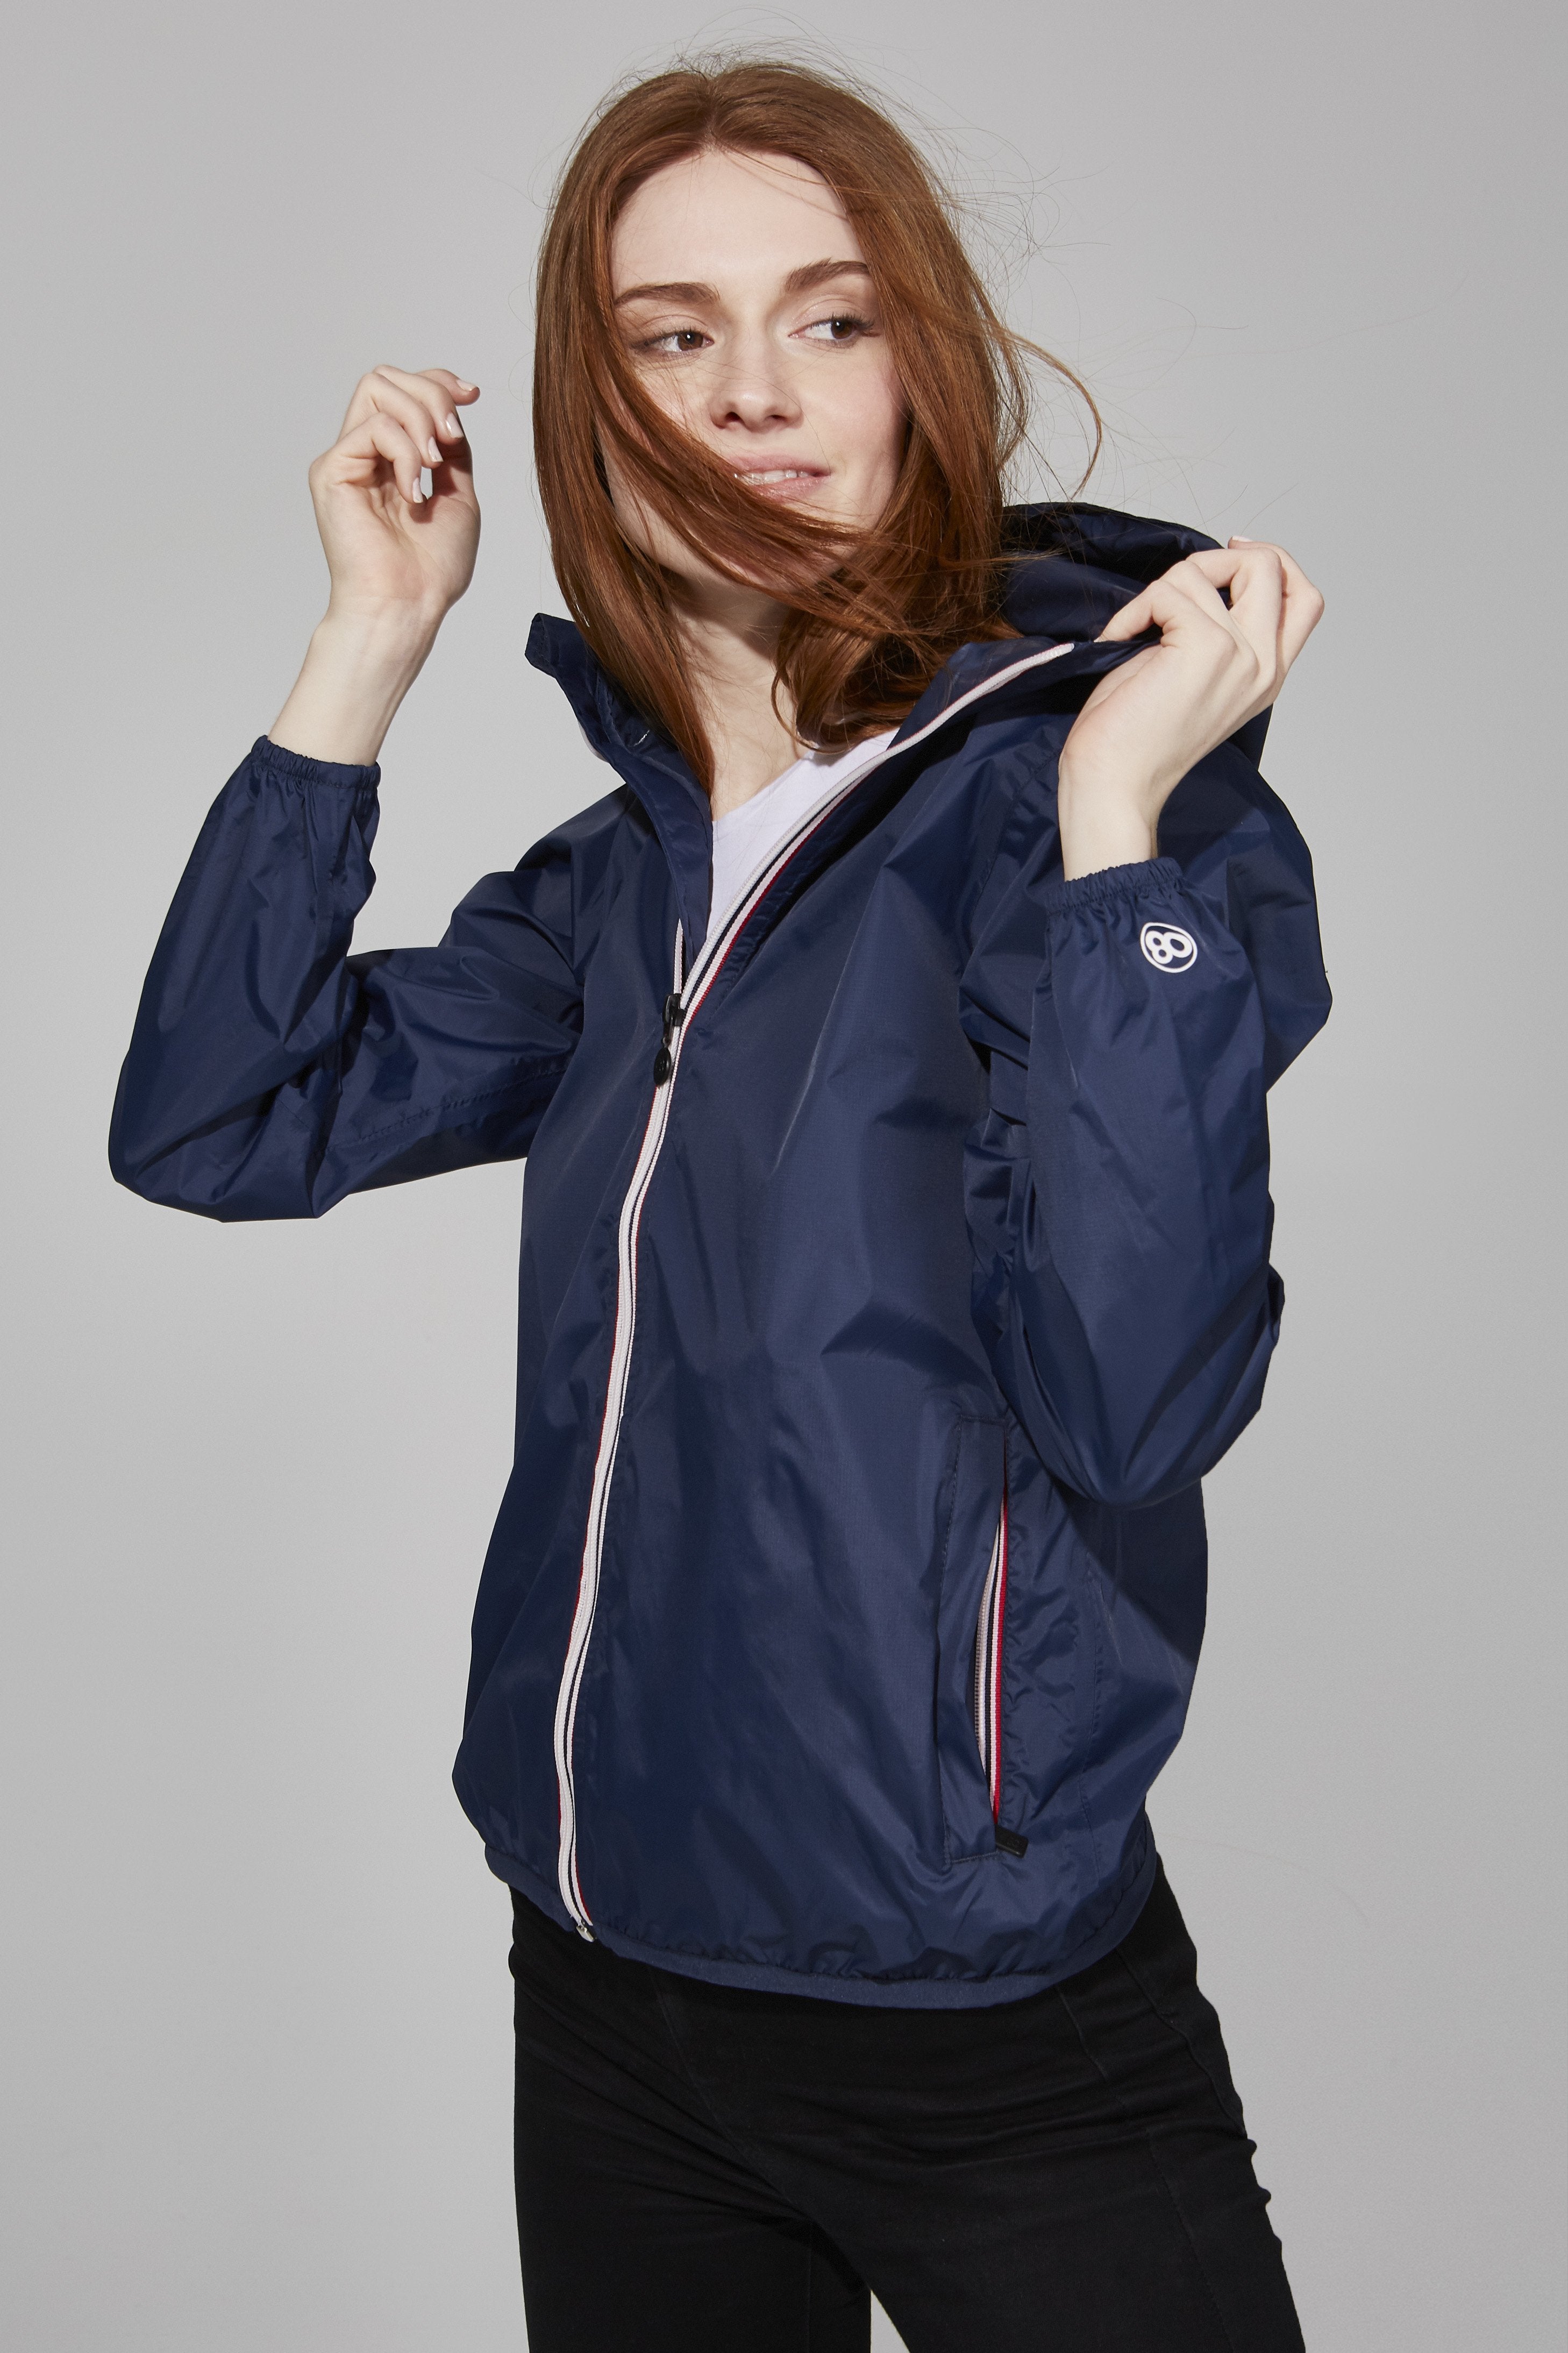 Sloane - Navy Full Zip Packable Rain Jacket - O8lifestyle.